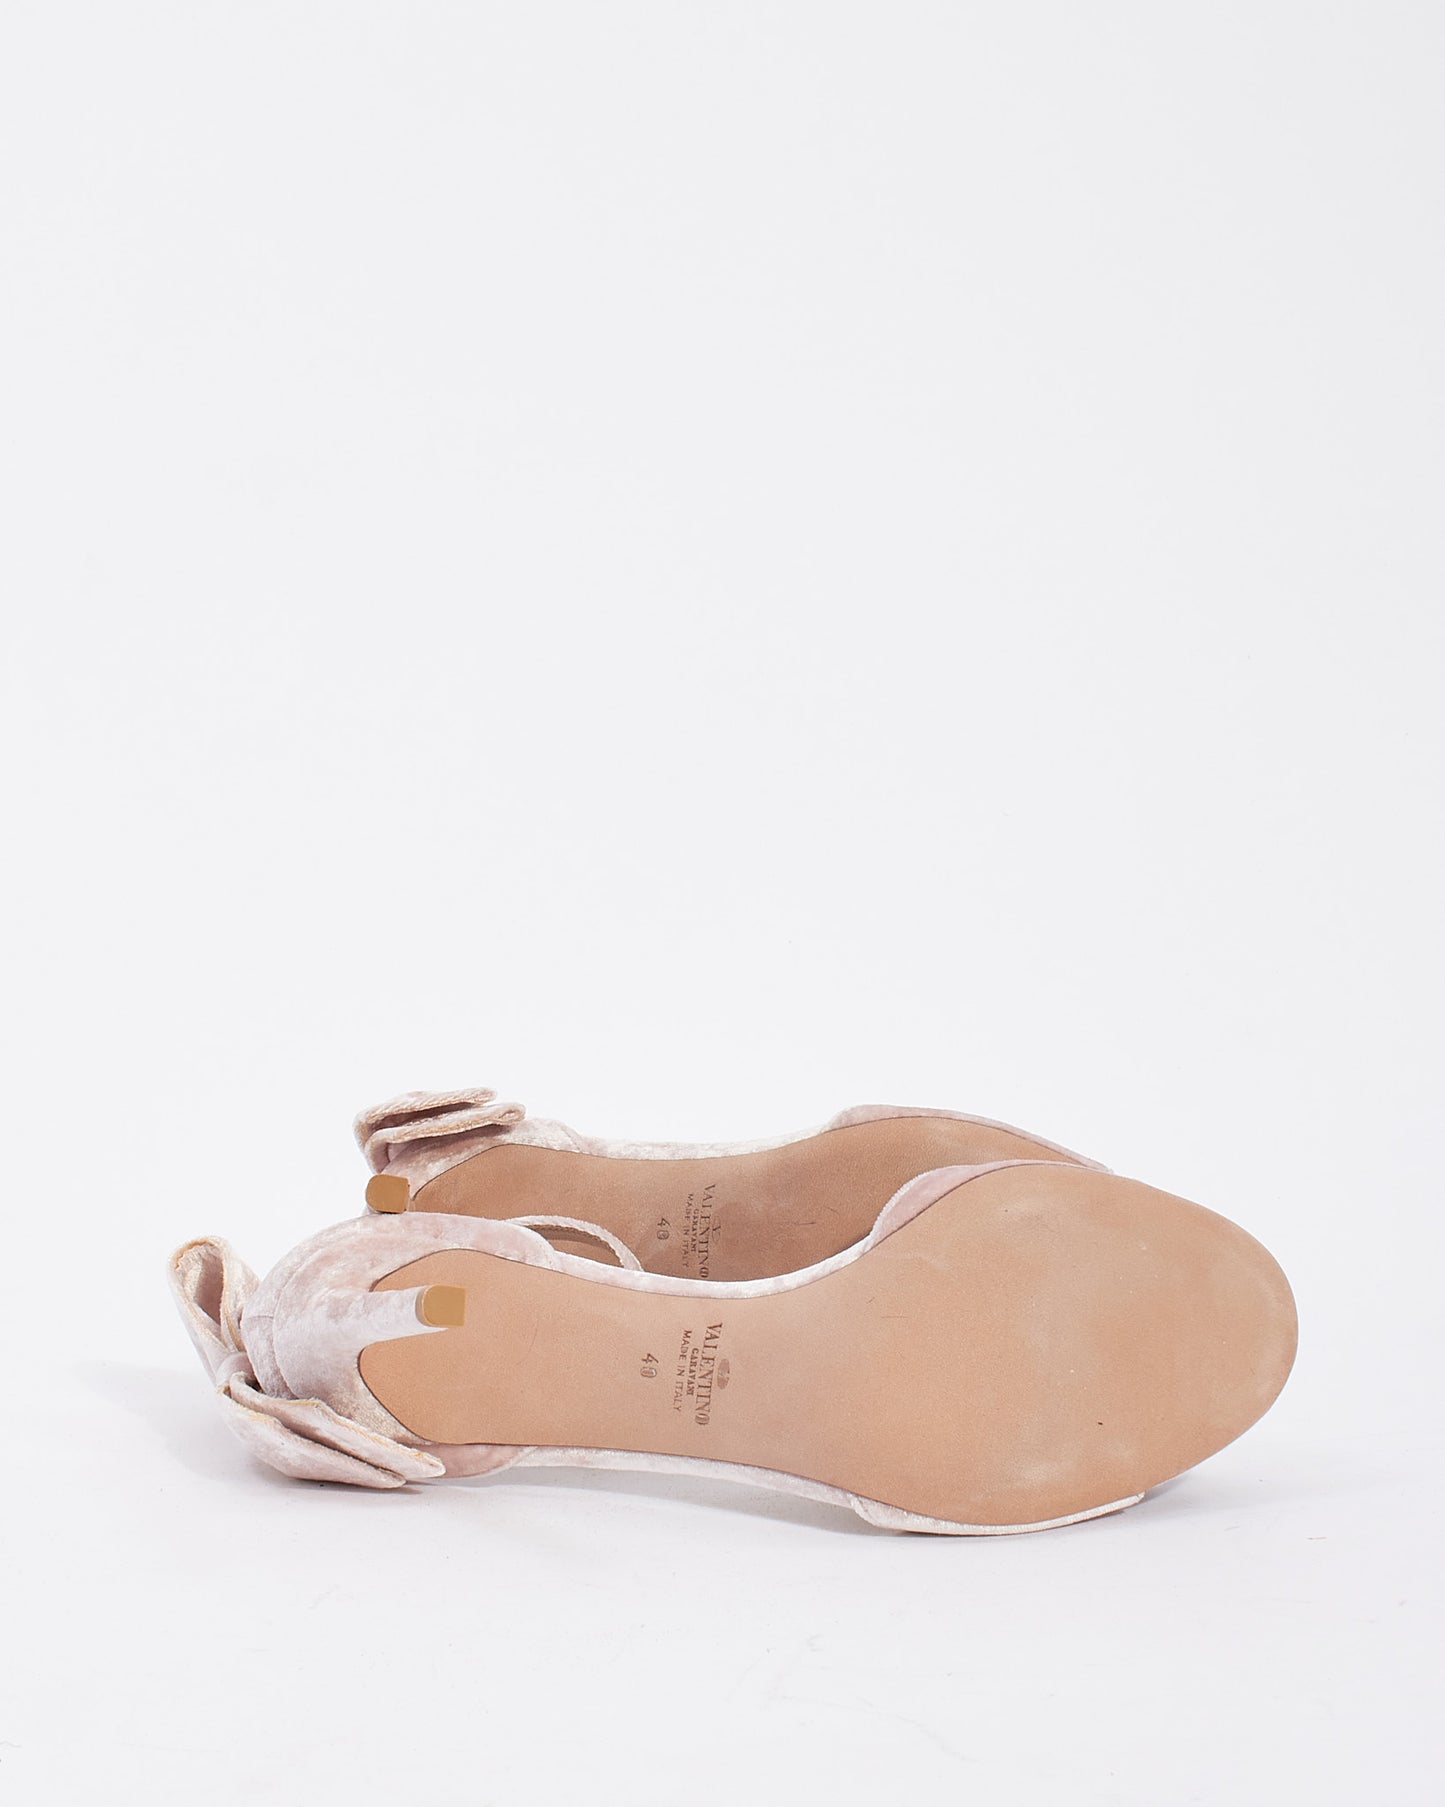 Valentino Pink Crushed Velvet Bow Sandals - 40